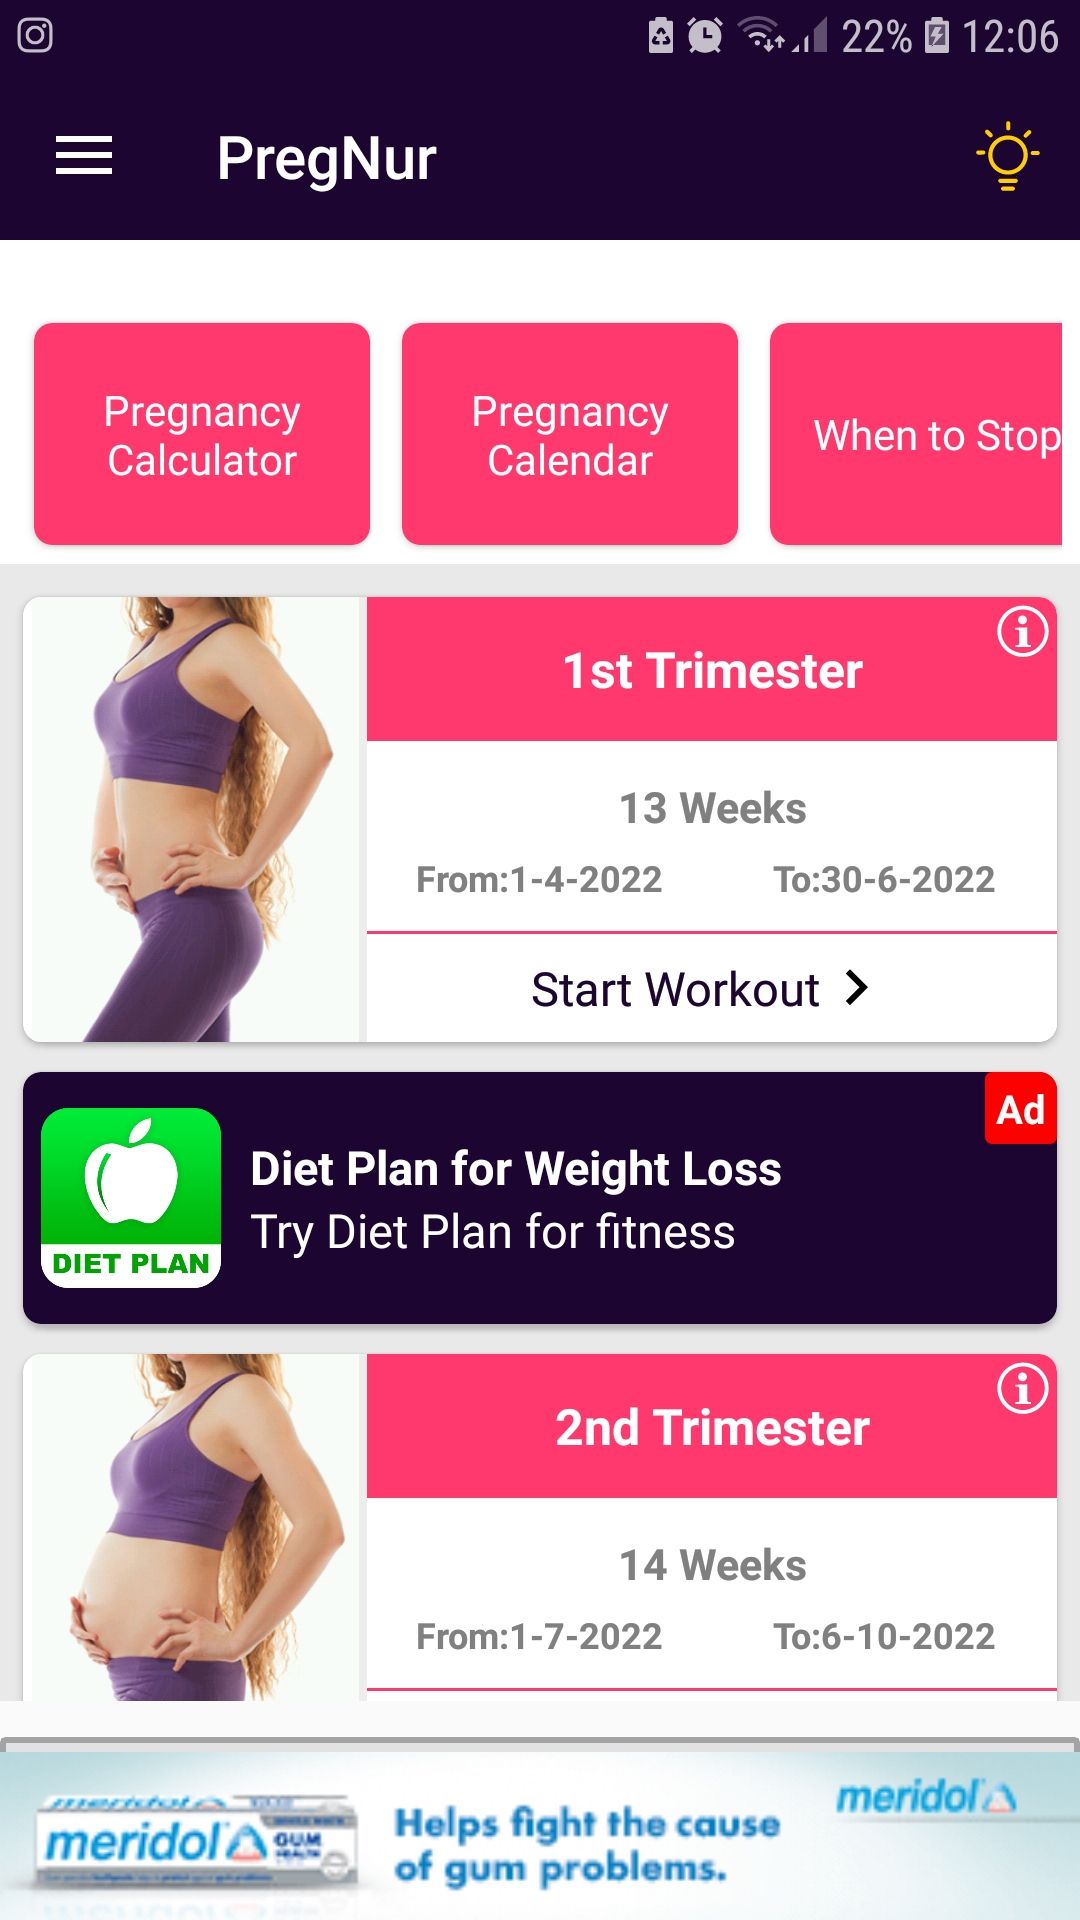 PregNur mobile prenatal exercise app